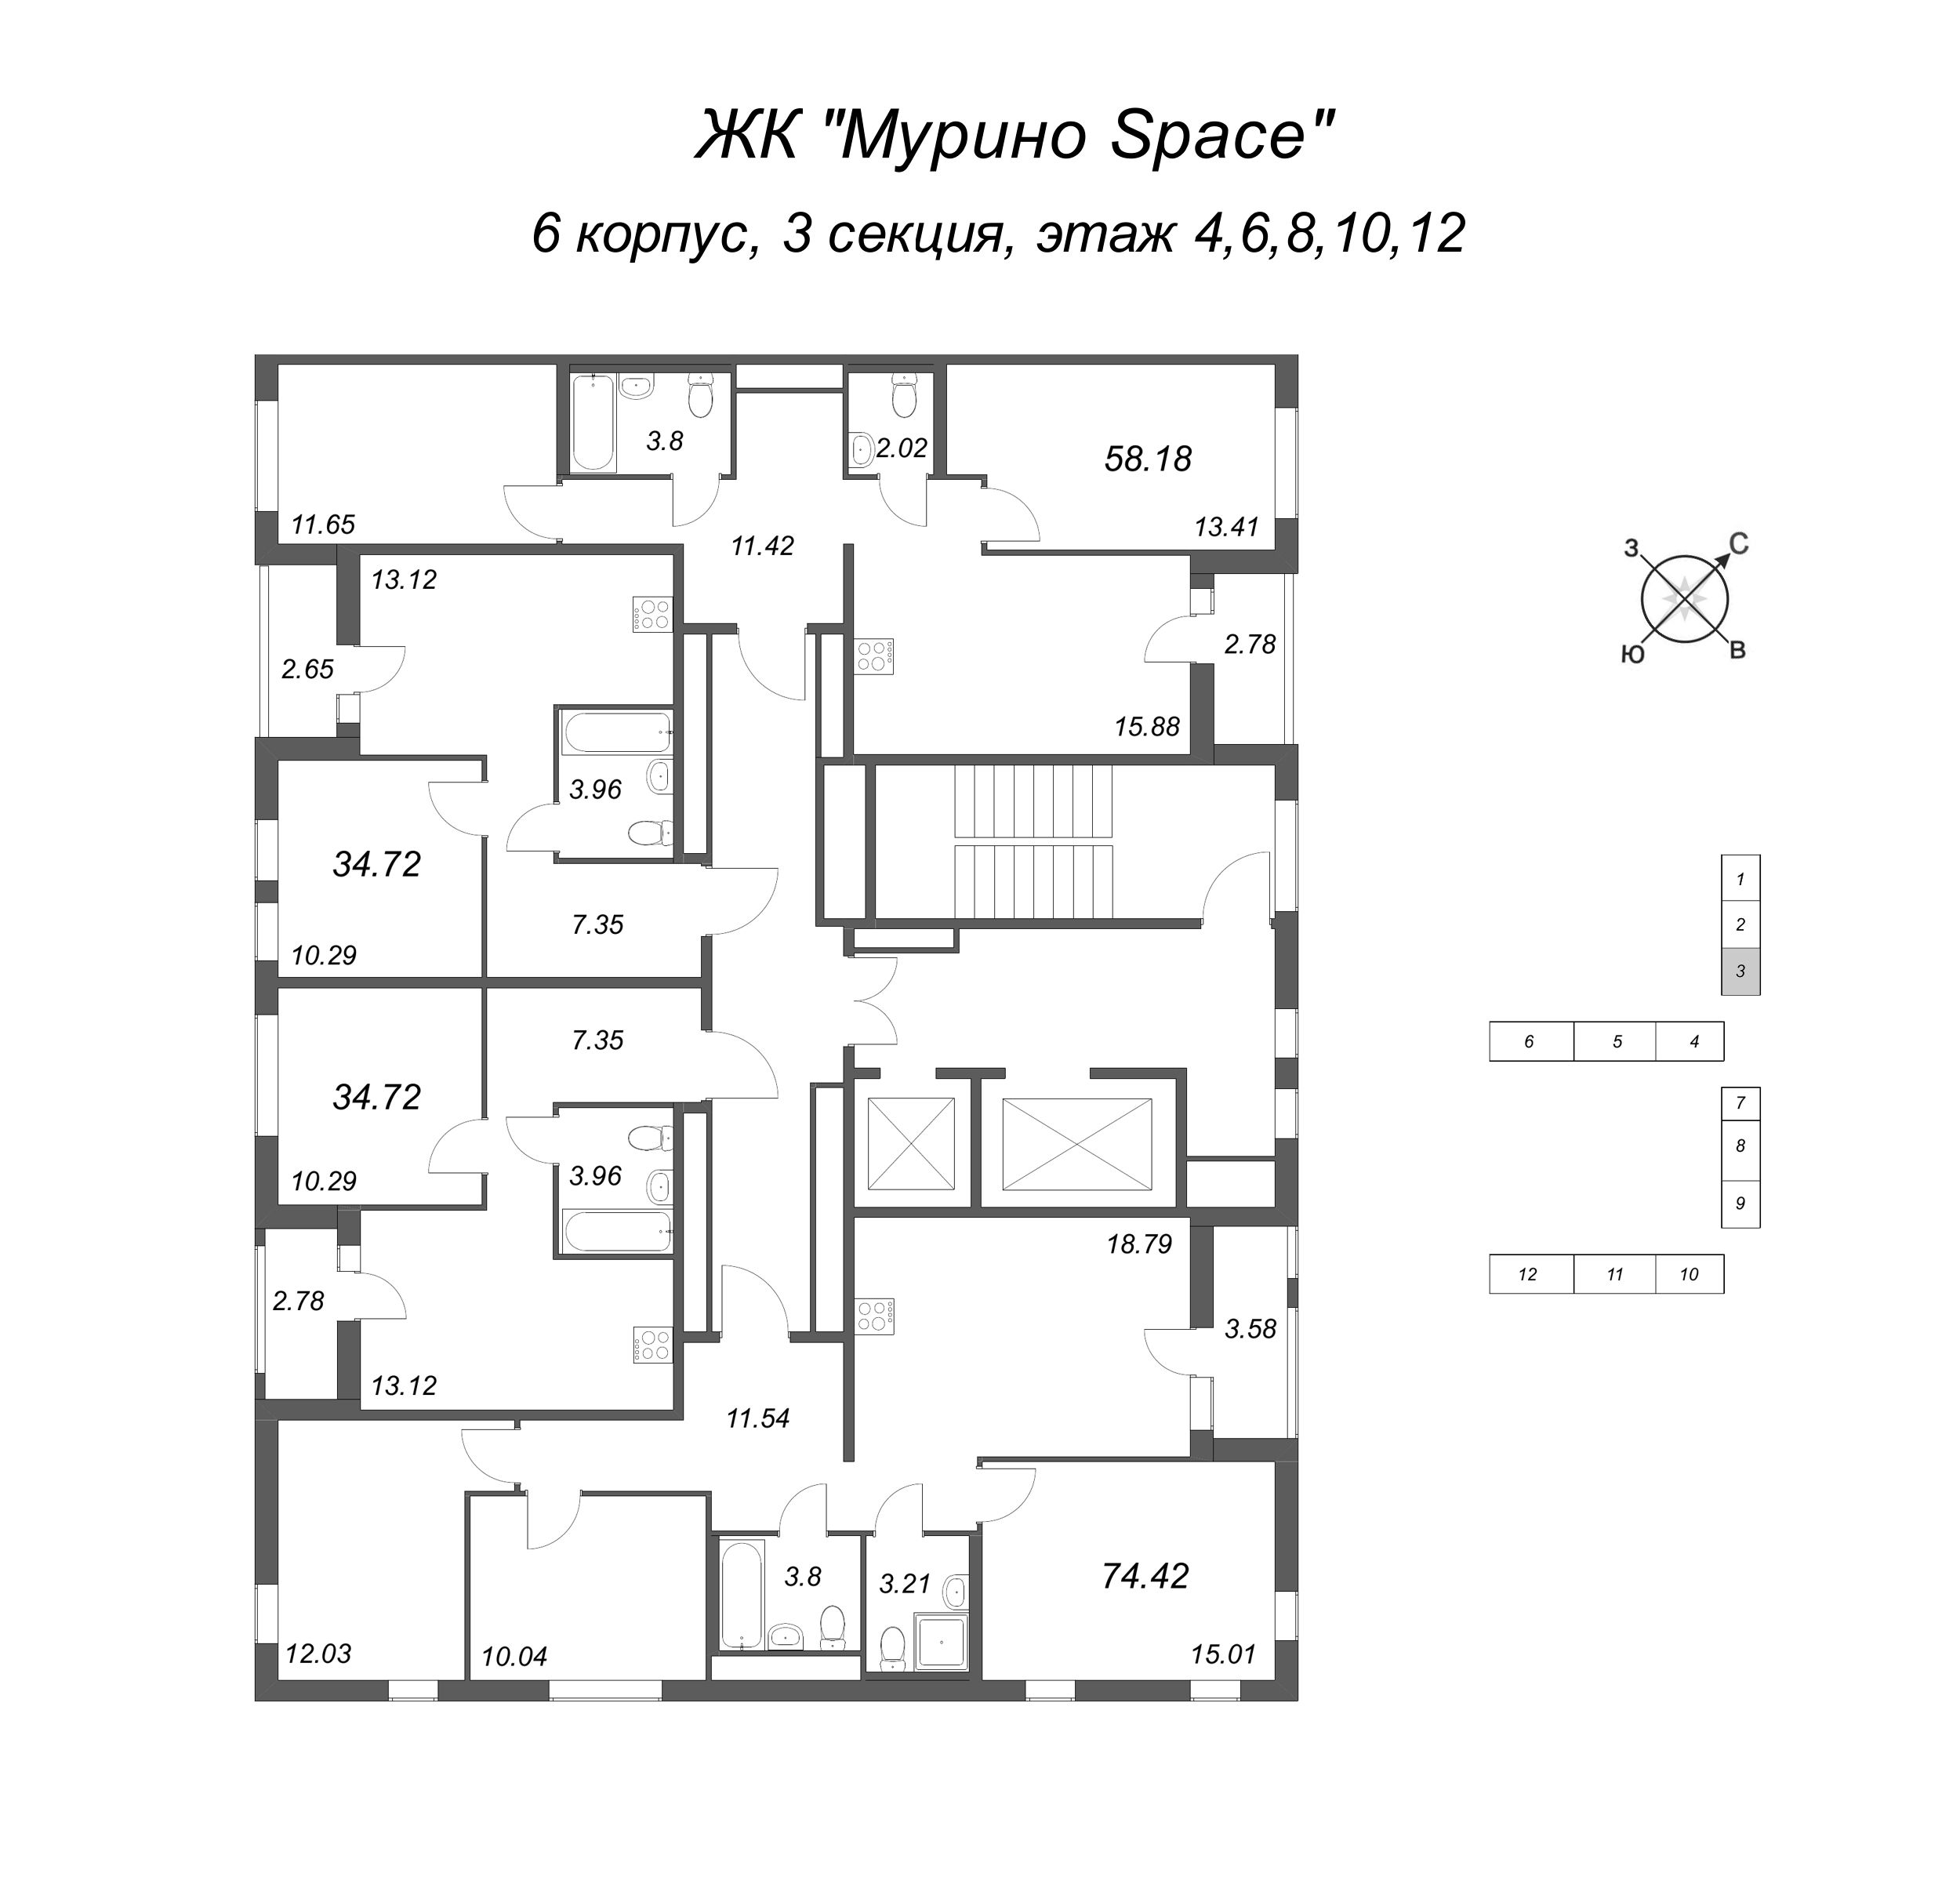 3-комнатная (Евро) квартира, 58.18 м² в ЖК "Мурино Space" - планировка этажа